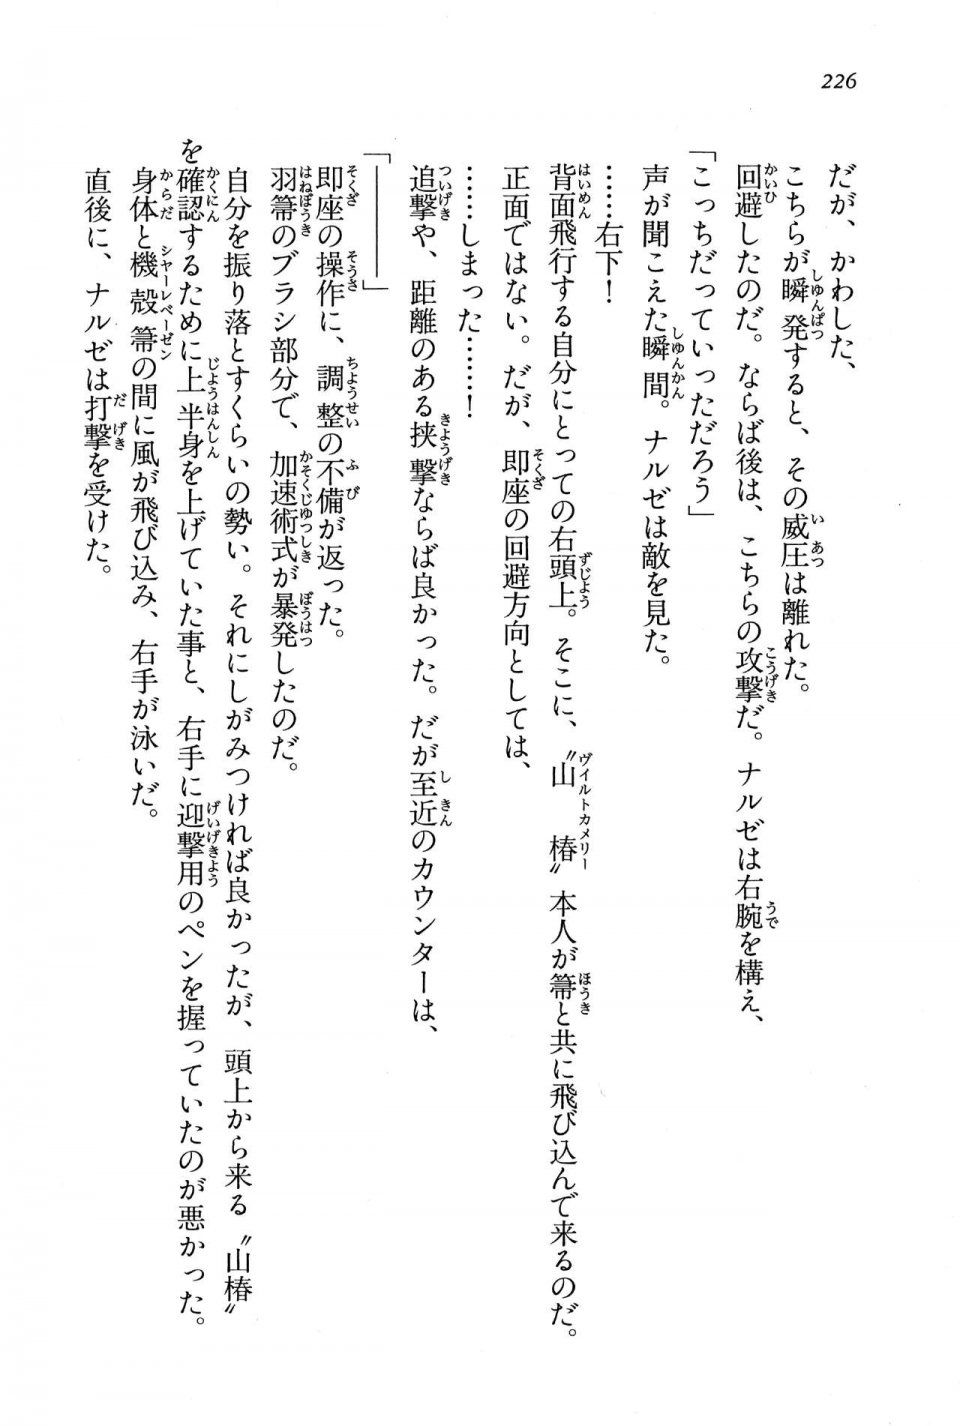 Kyoukai Senjou no Horizon BD Special Mininovel Vol 7(4A) - Photo #230